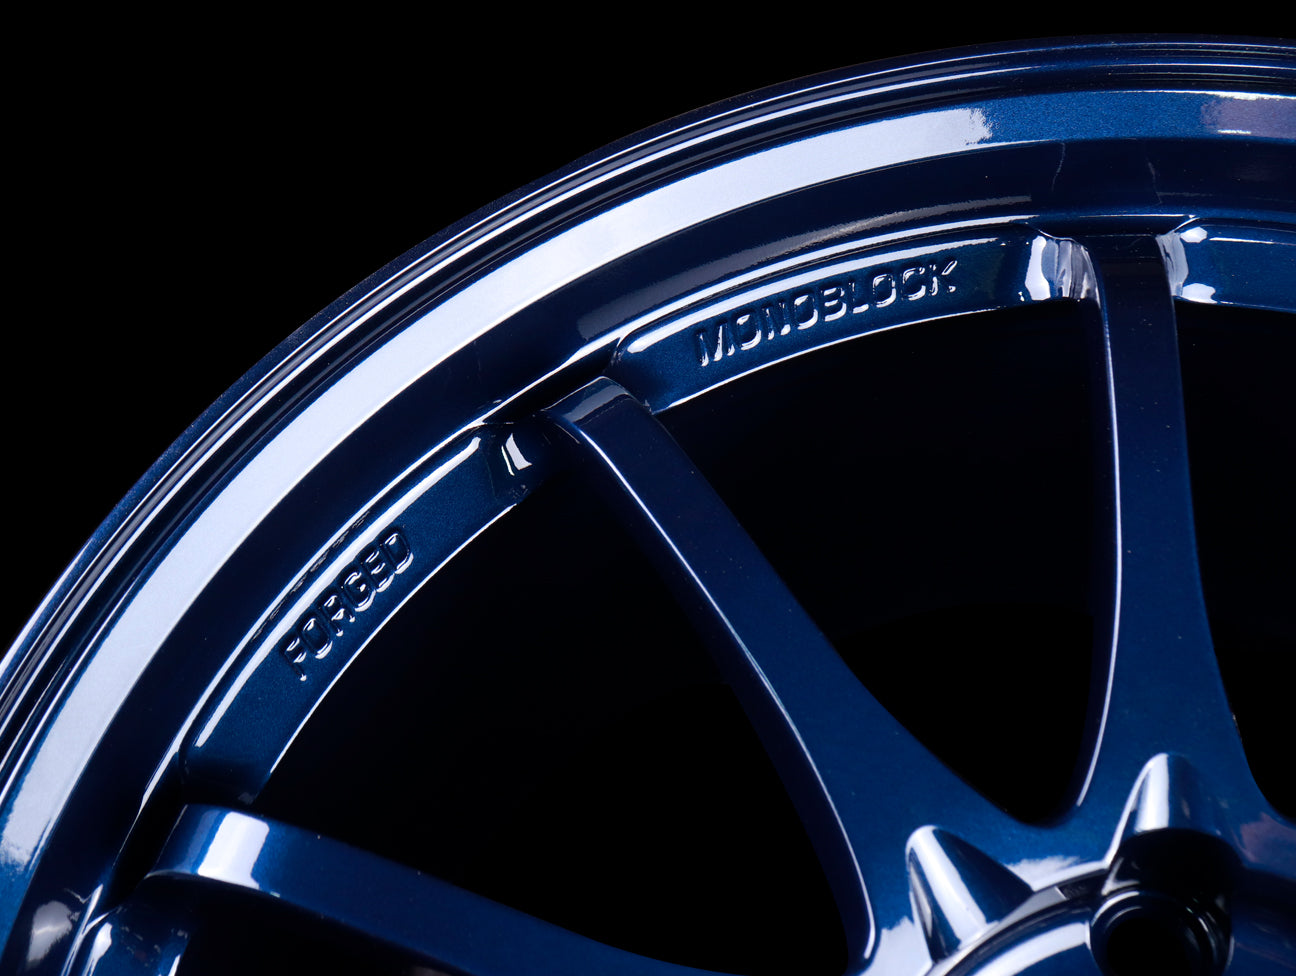 Volk Racing CE28SL Wheels - Mag Blue 18x9.5 / 5x120 / +35